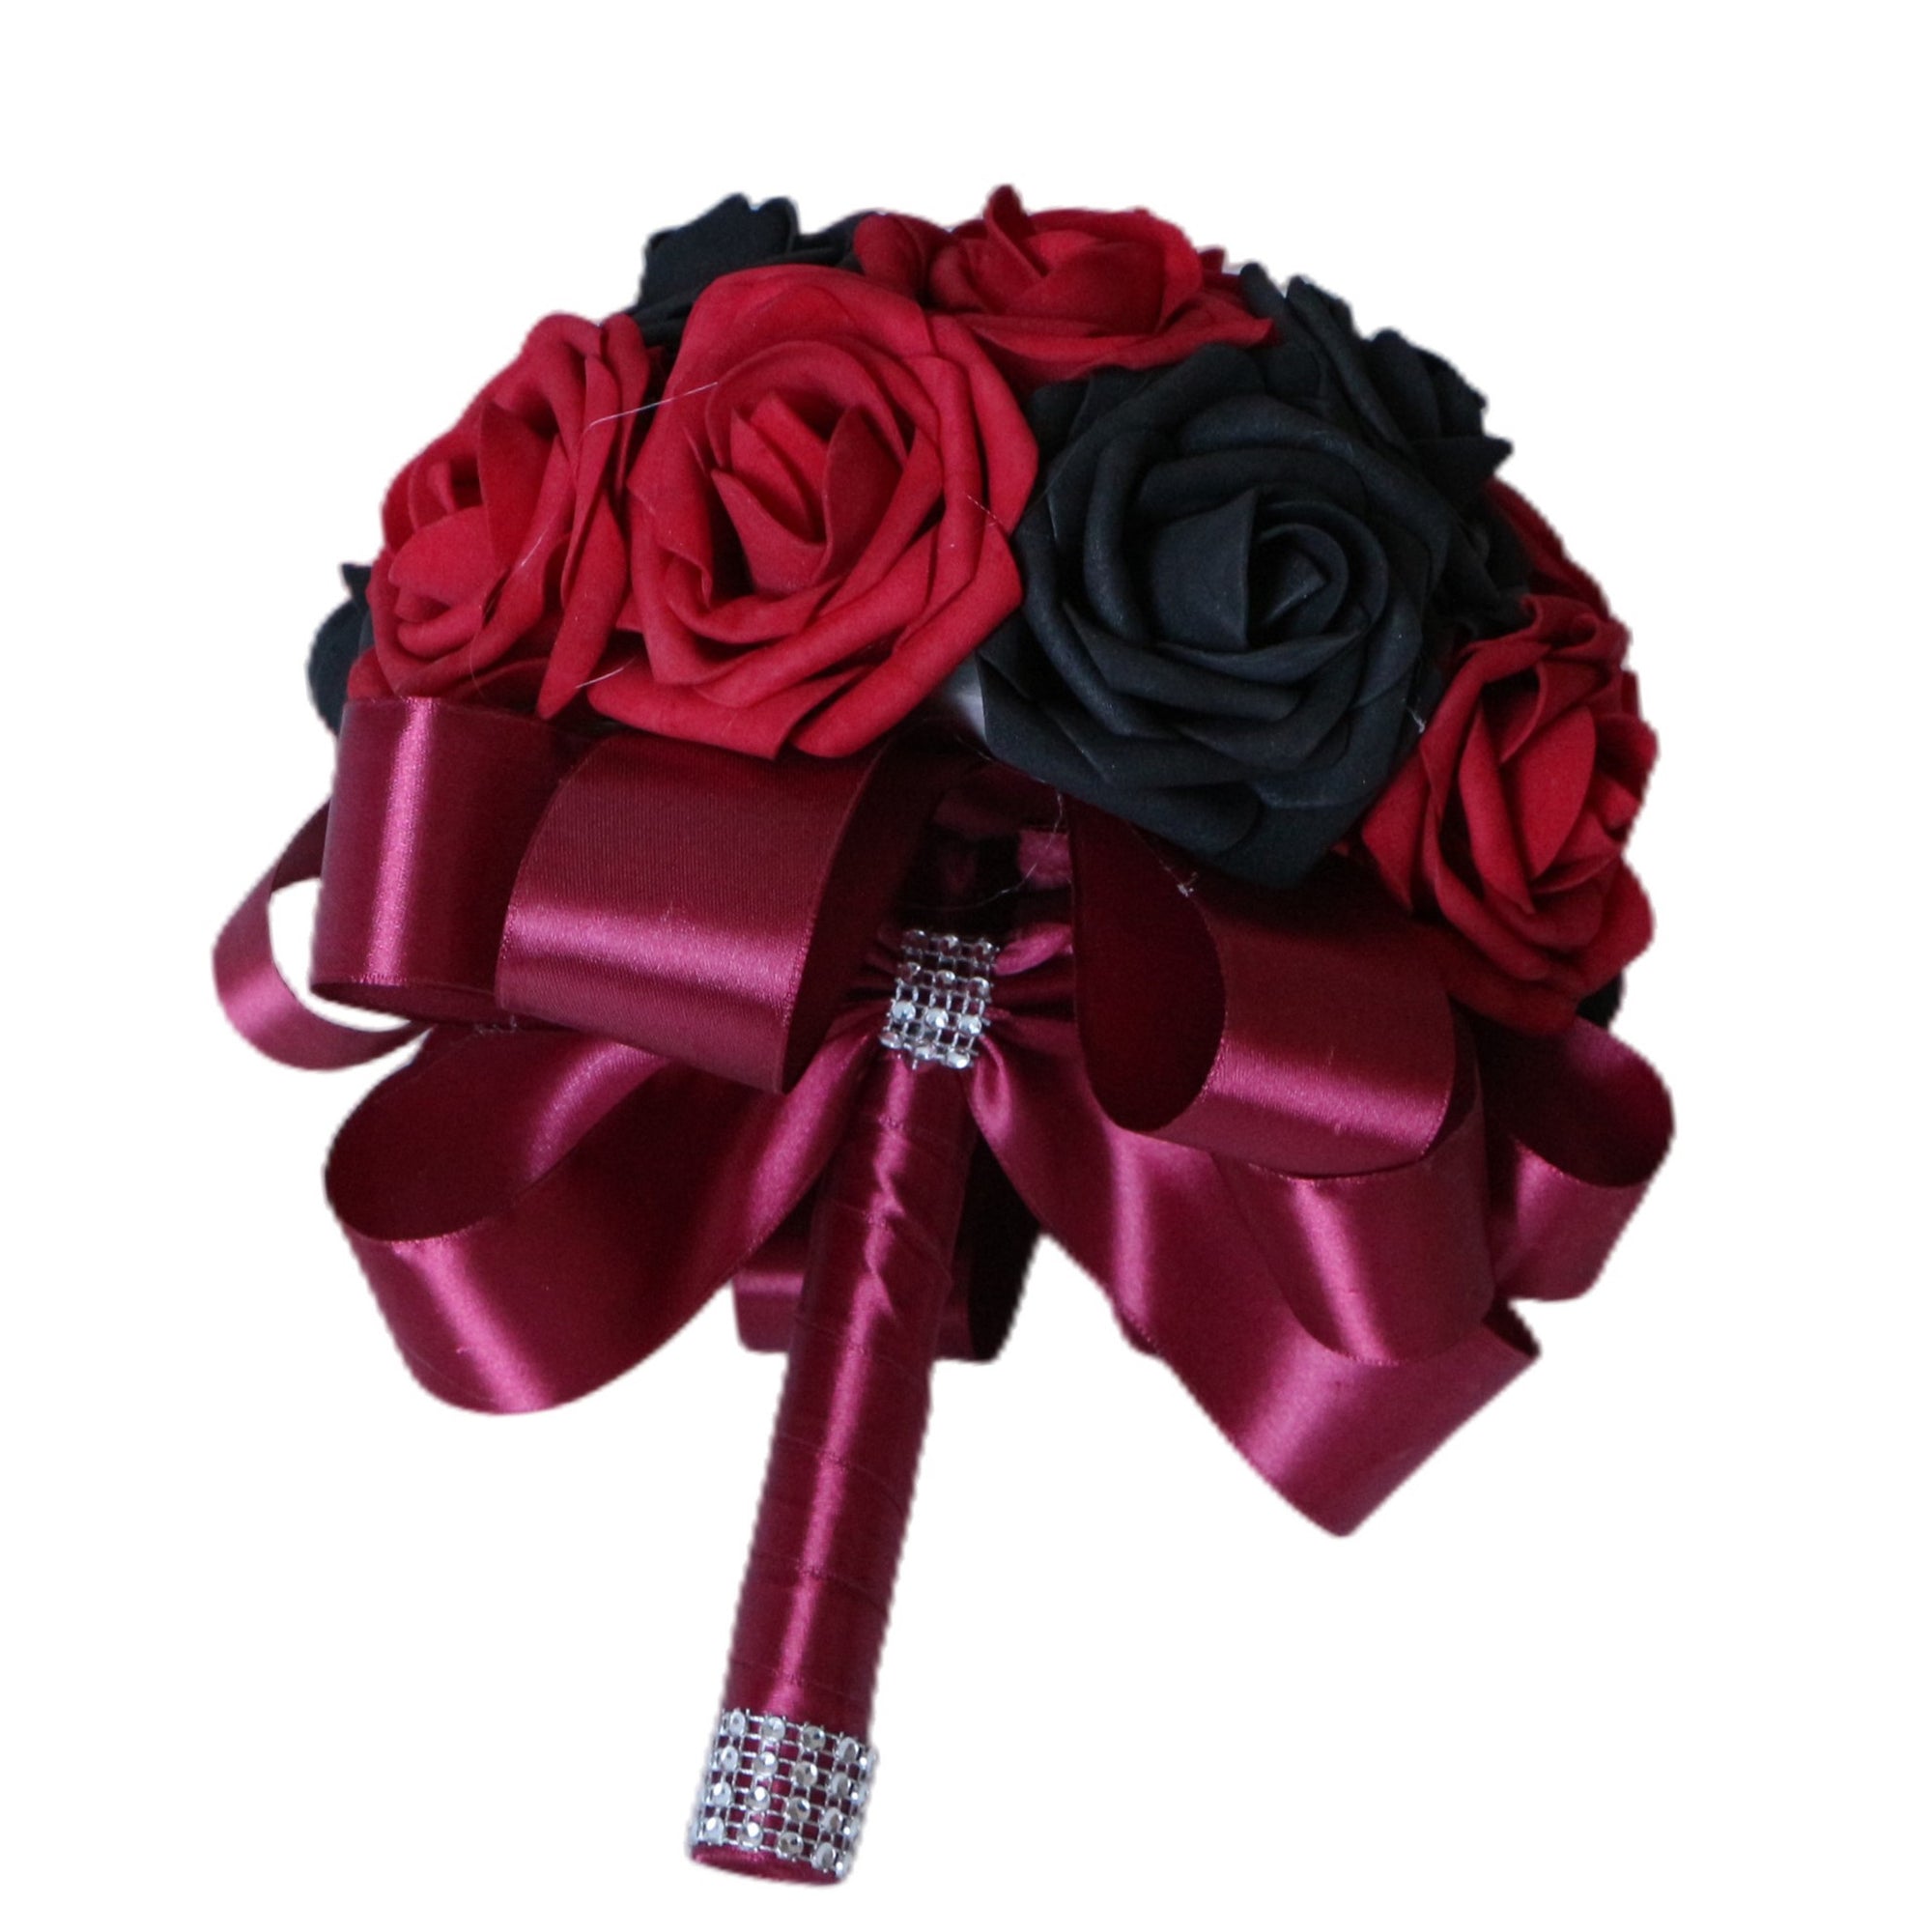 Dark Red White Black Roses Artificial Flower Bouquet